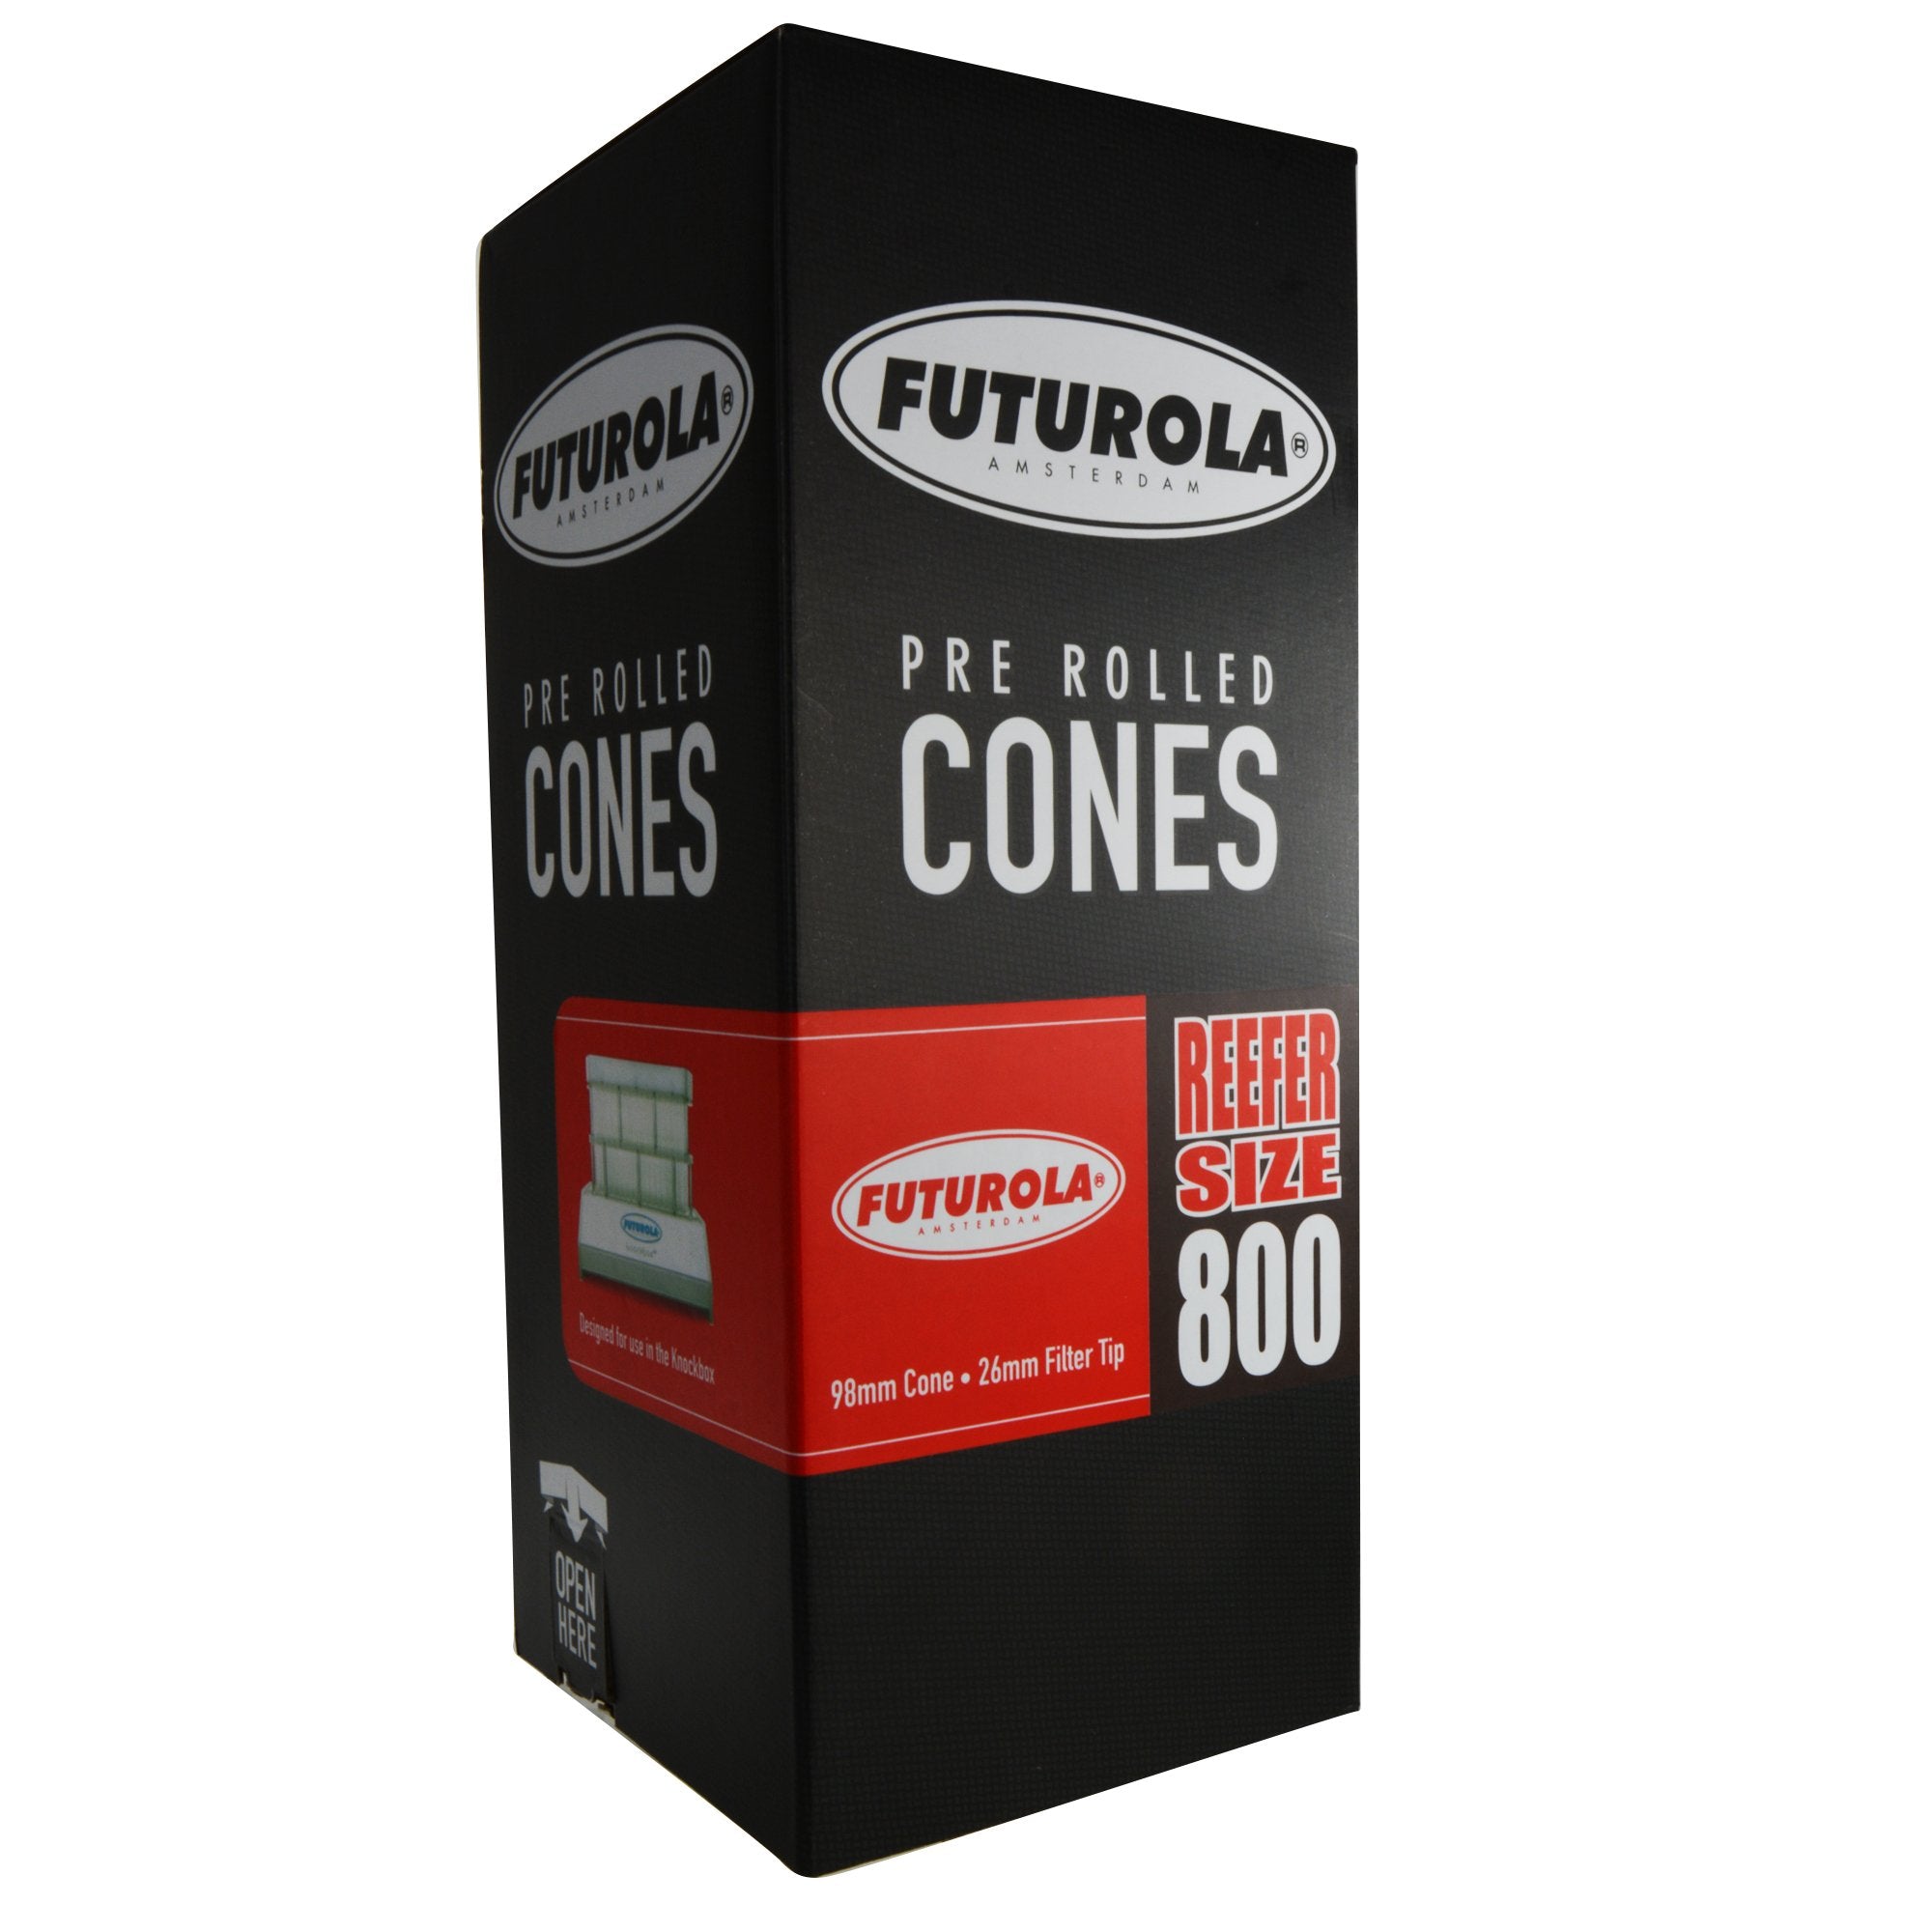 FUTUROLA | Reefer Size Pre-Rolled Cones | 98mm - Classic White Paper - 800 Count - 1